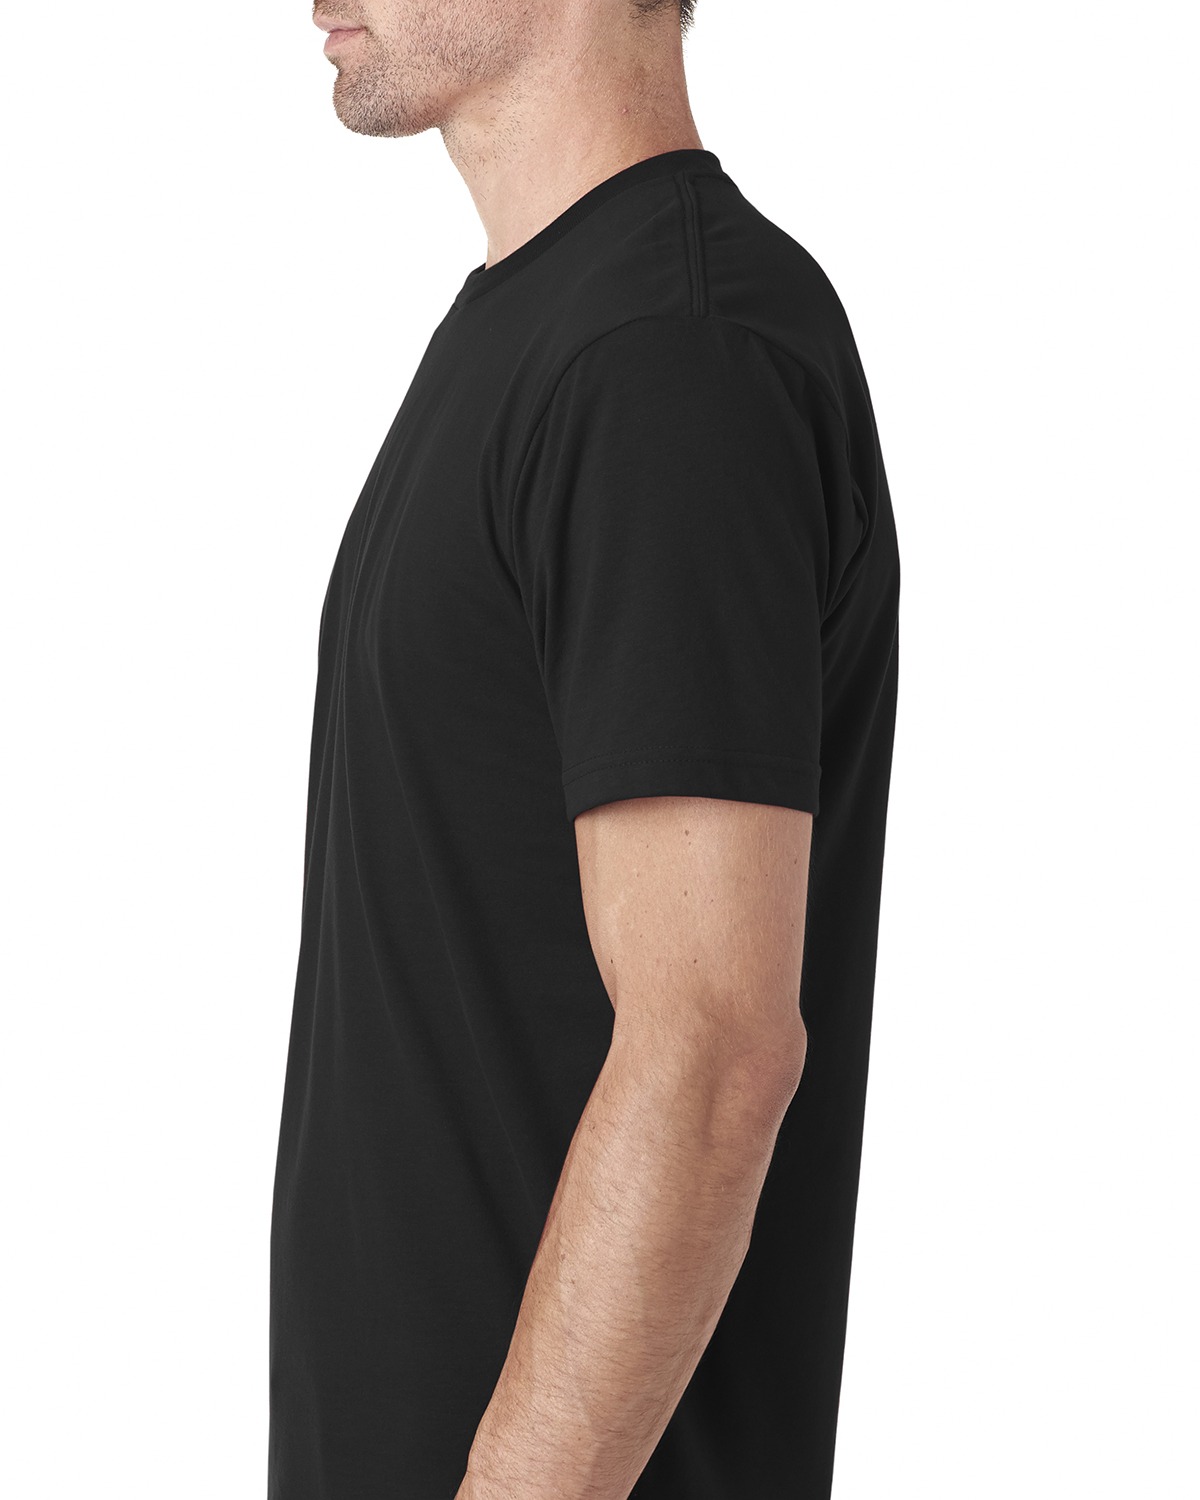 Next Level Apparel® 6410 Unisex Sueded T-Shirt - Wholesale Apparel